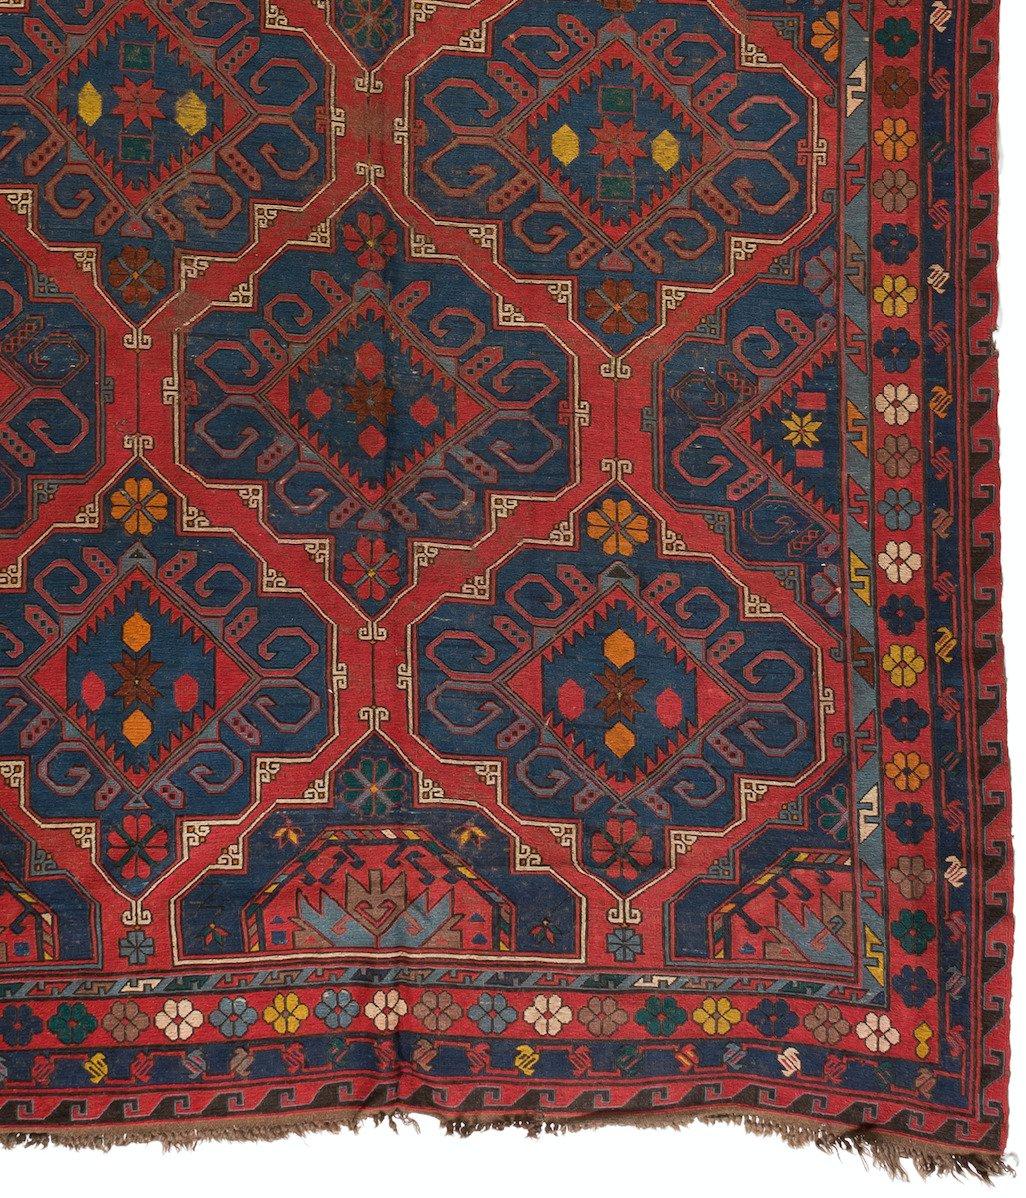 Hand-Woven Antique Red Navy Geometric Tribal Flat-Weave Caucasian Soumak Rug For Sale